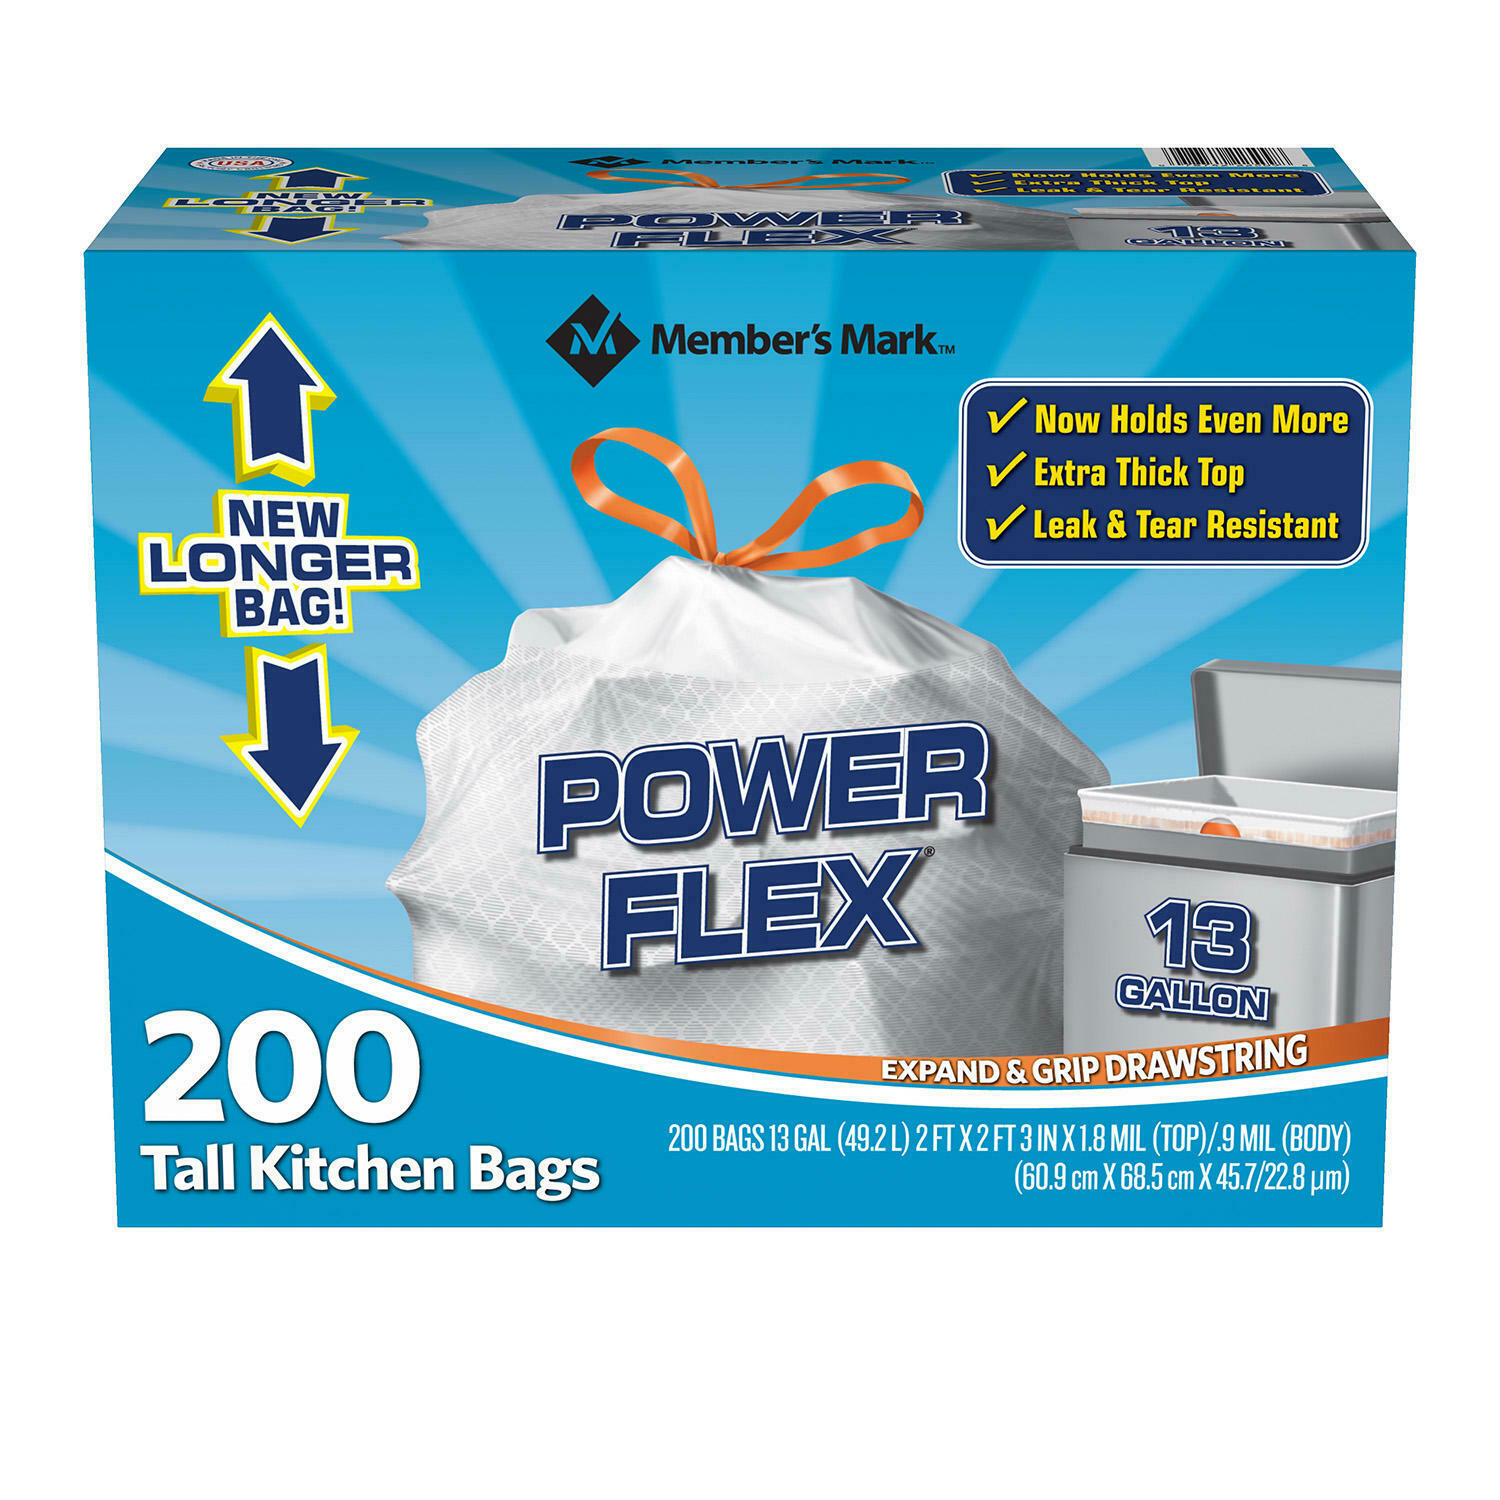 Member's Mark Power Flex Tall Kitchen Drawstring Original Trash Bags (13 Gallon.